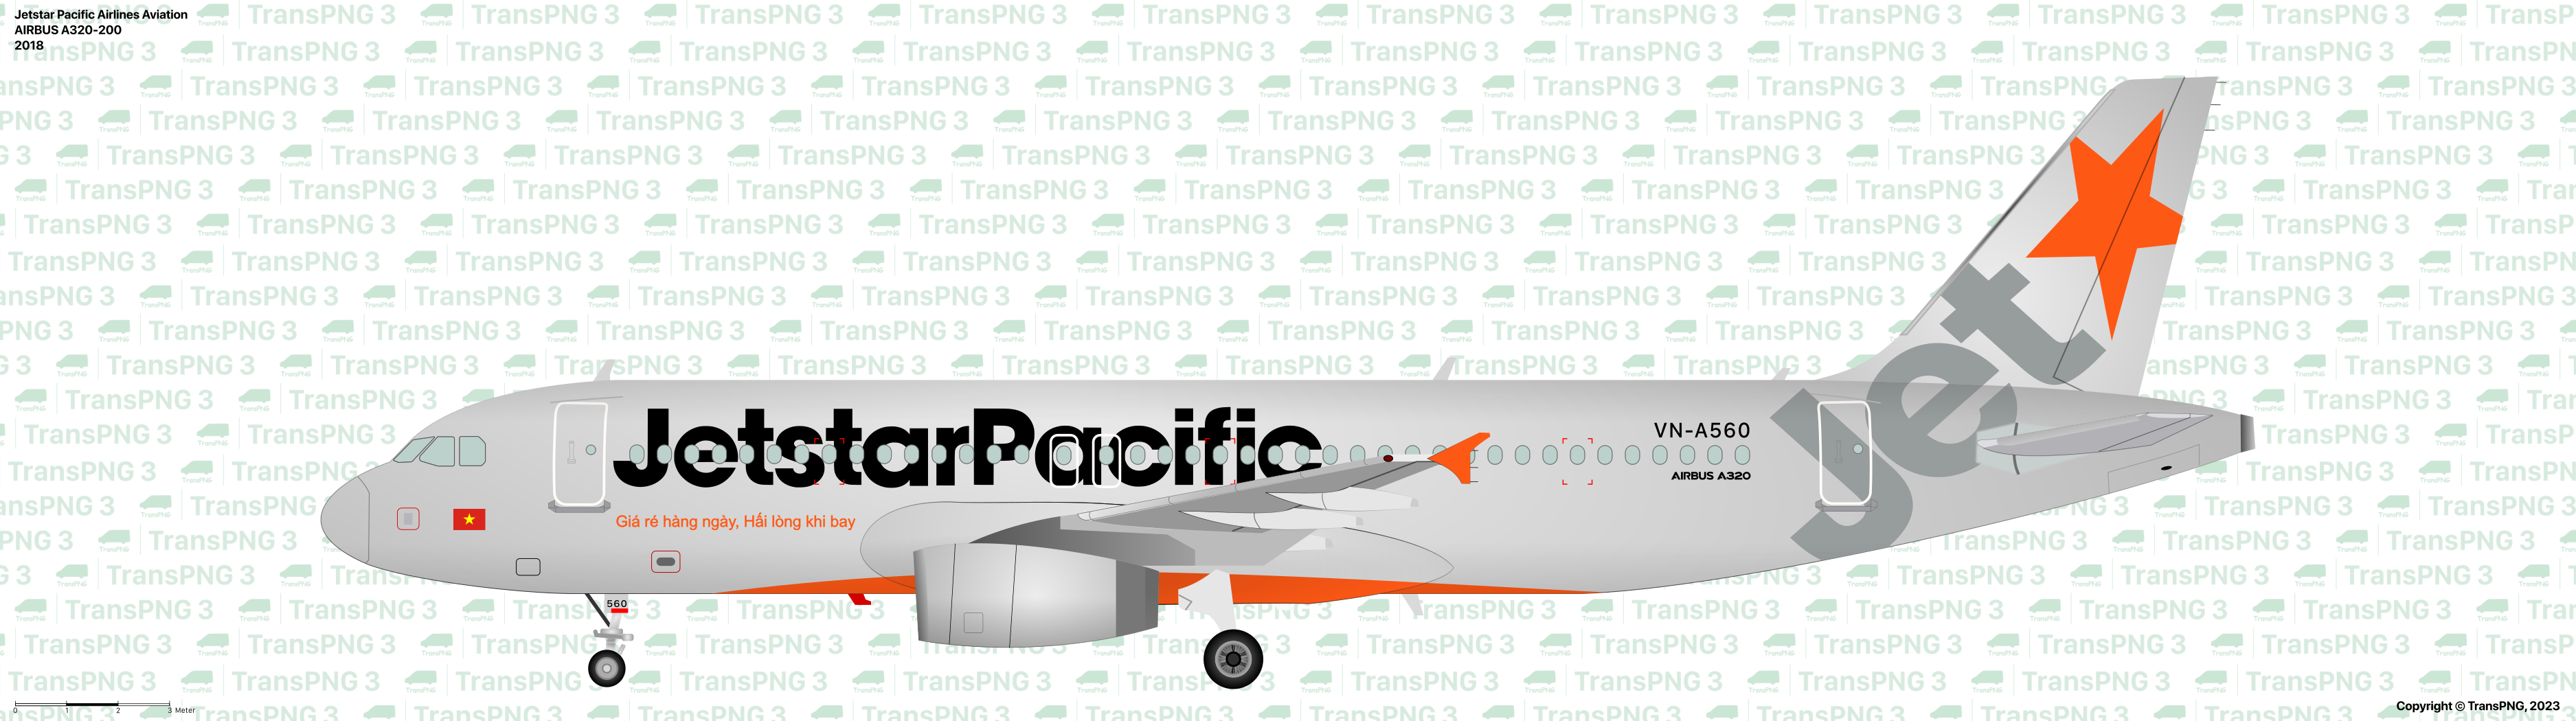 TransPNG.net | 分享世界各地多種交通工具的優秀繪圖 - 客機 53300166009_47ec14d6c1_o